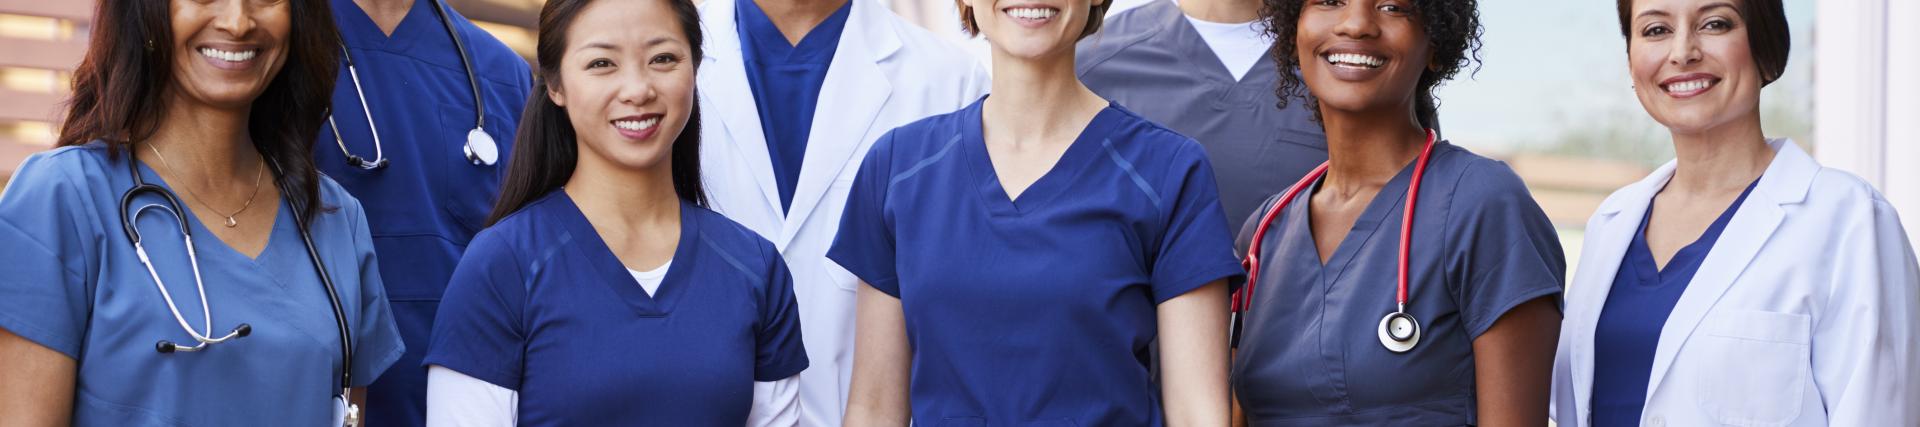 Large team of medical staff standing together smiling